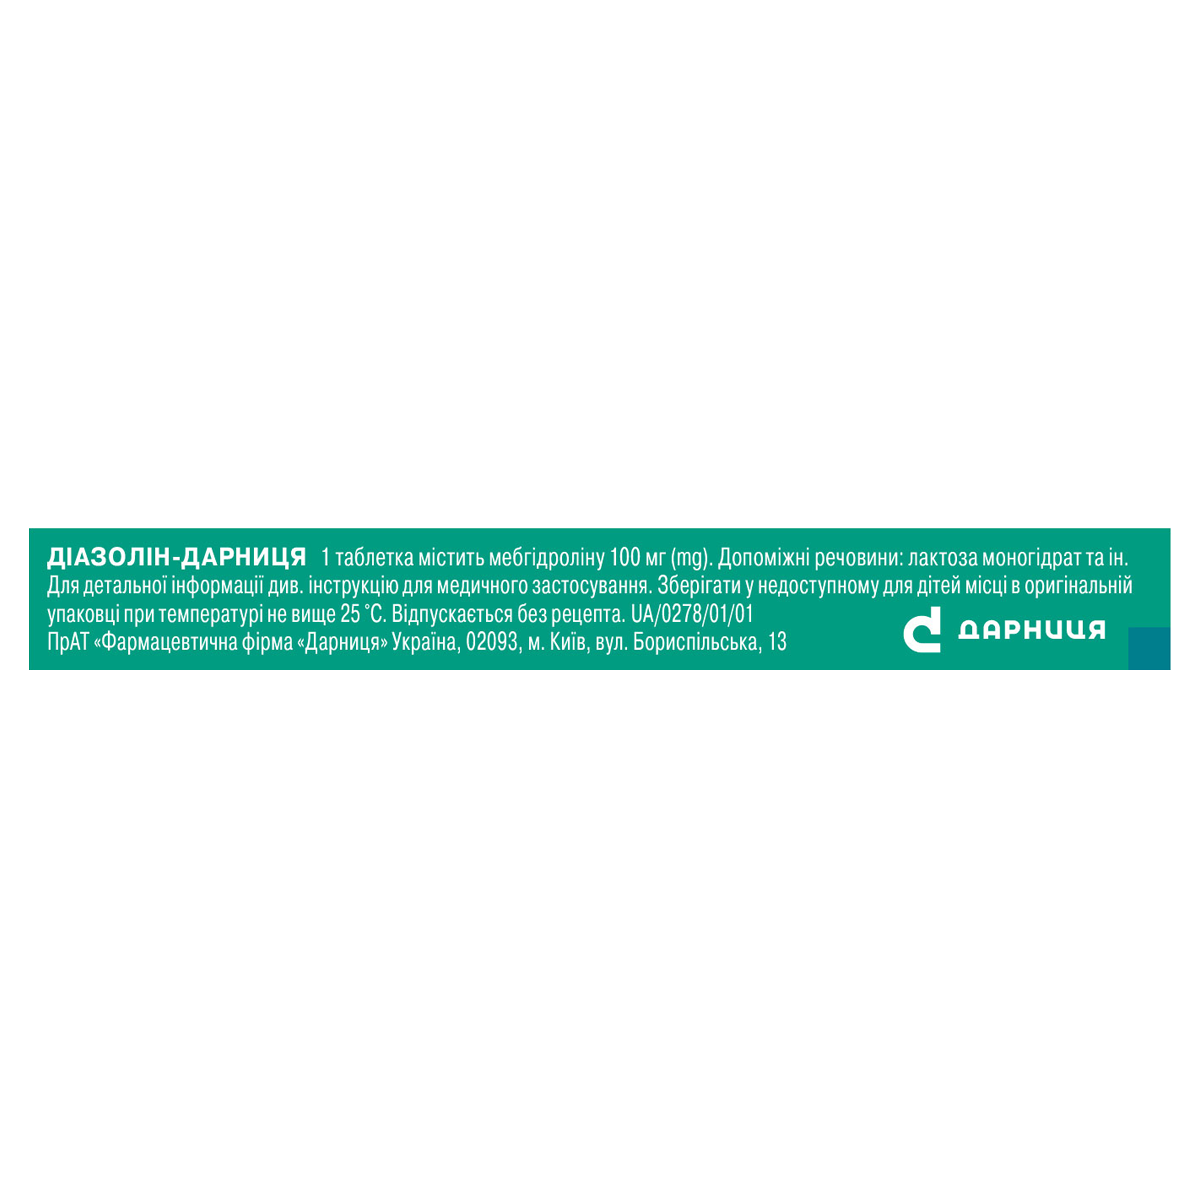 Diazolin-Darnitsa «Darnytsia» pharmaceutical company